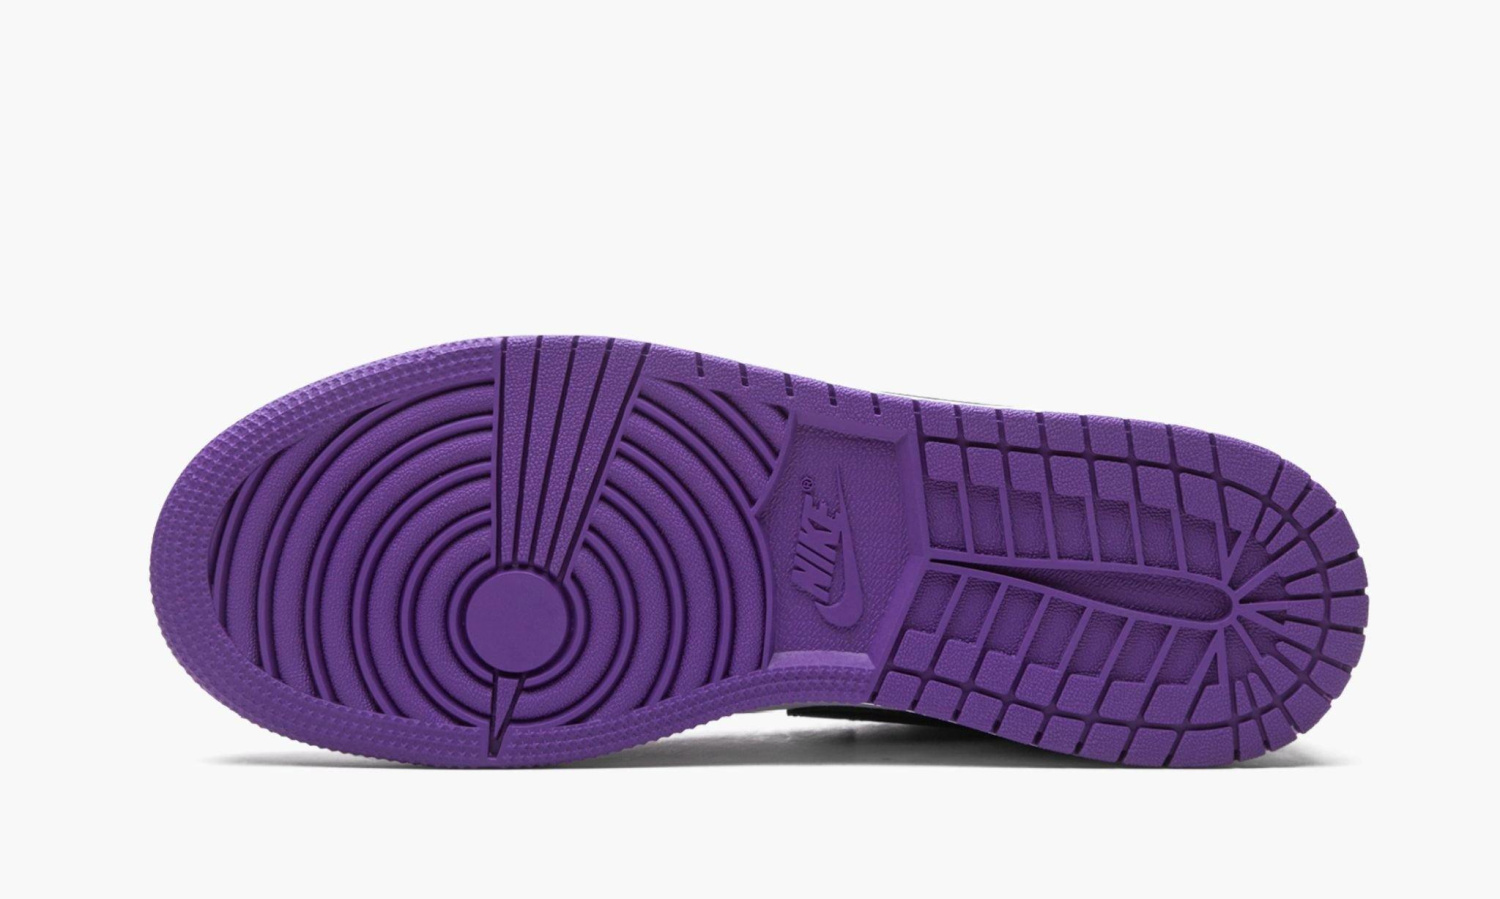 Jordan 1 Low GS "Court Purple" фото кроссовок